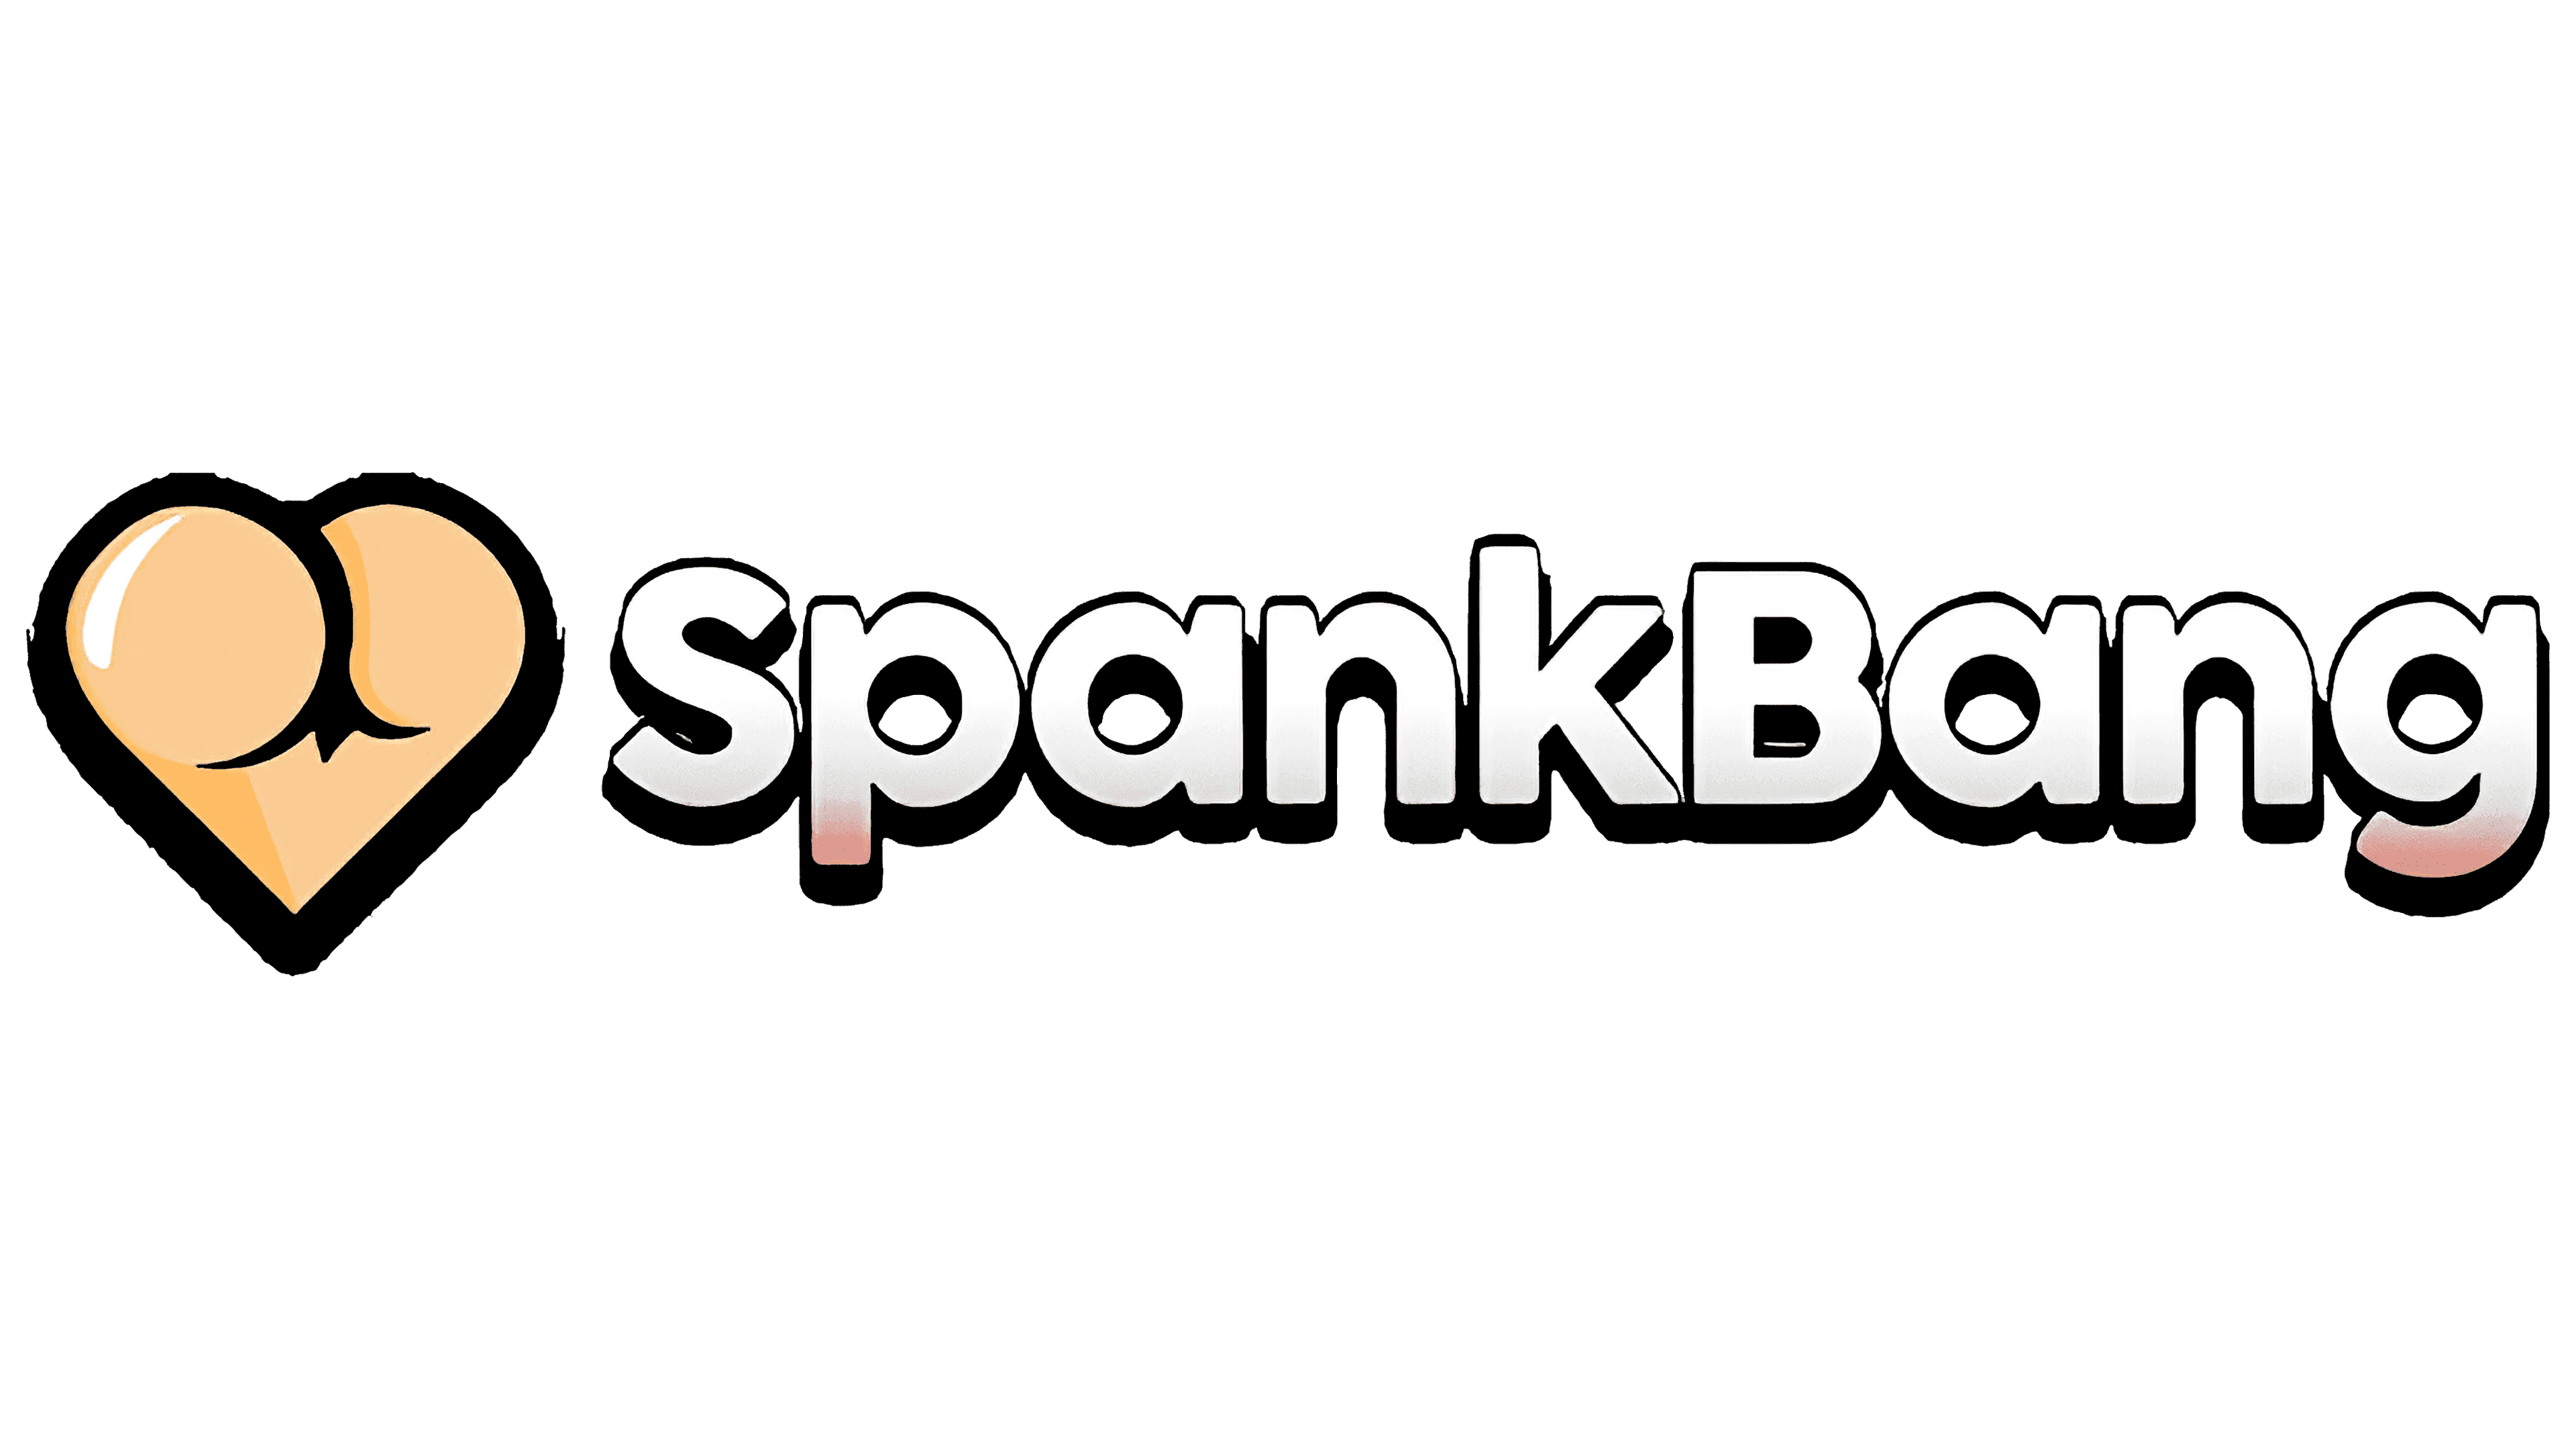 Spanknamg